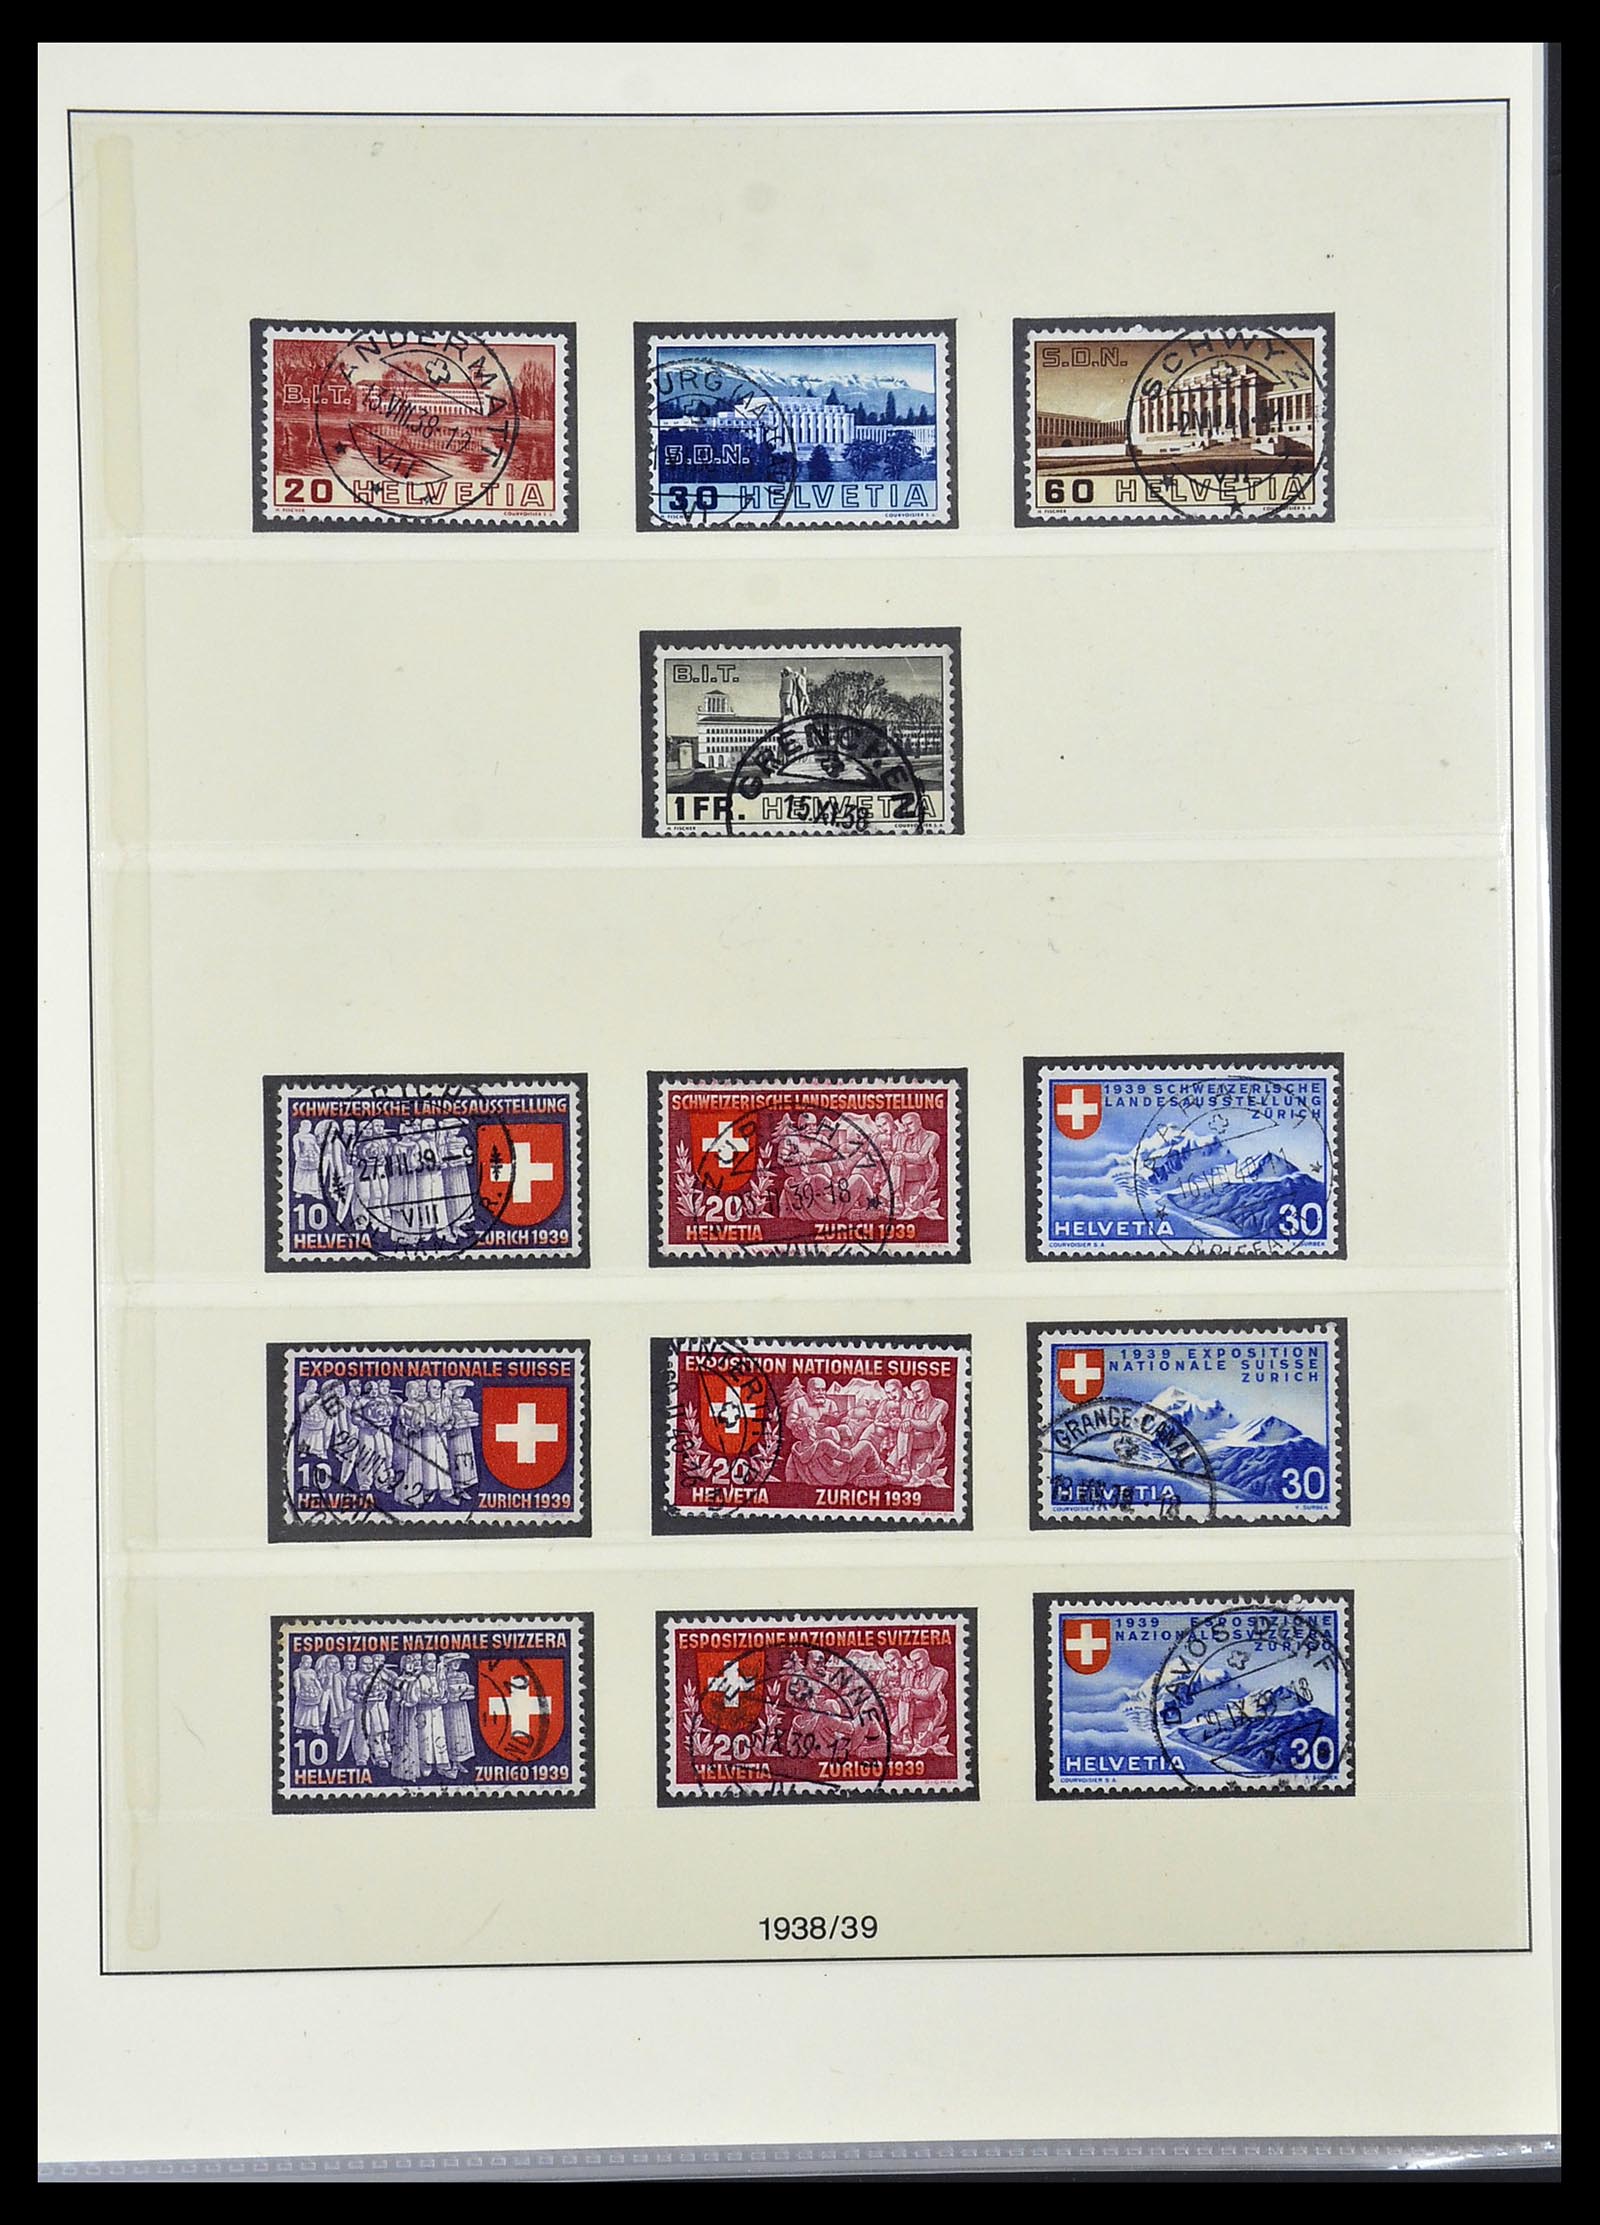 33955 028 - Stamp collection 33955 Switzerland 1850-2009.